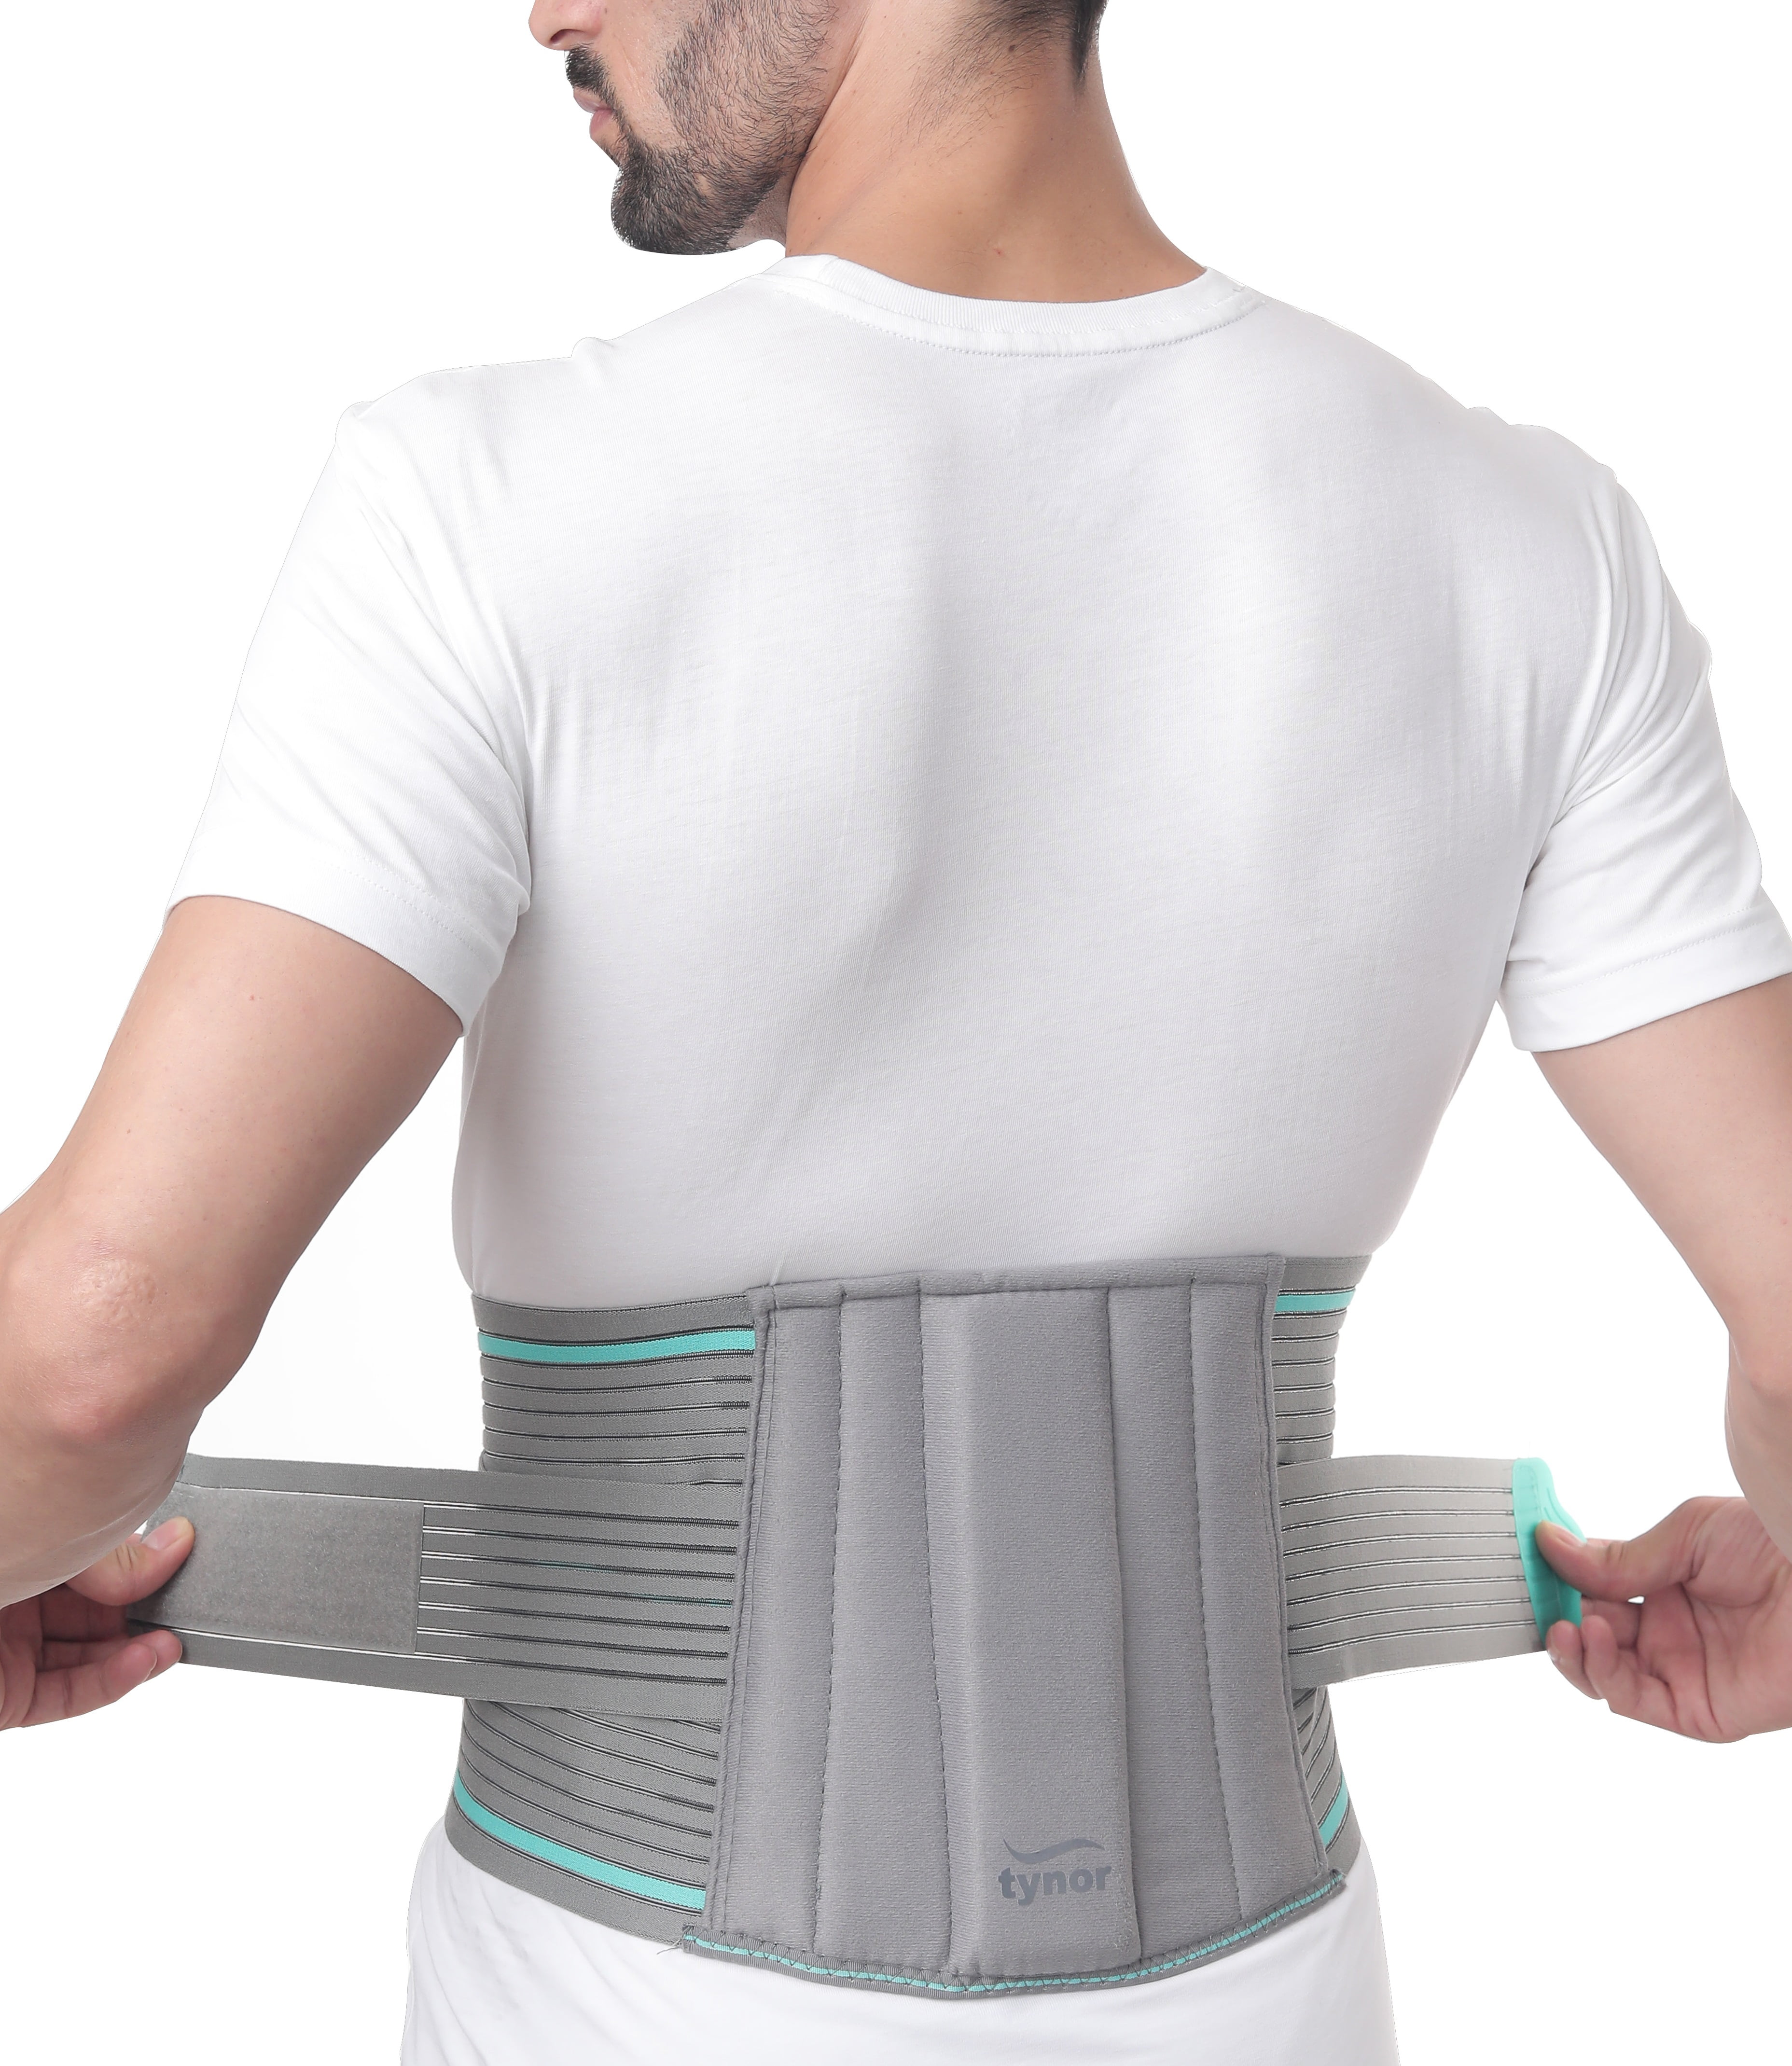 Pro Orthopaedic #200 Low Back Support Belt